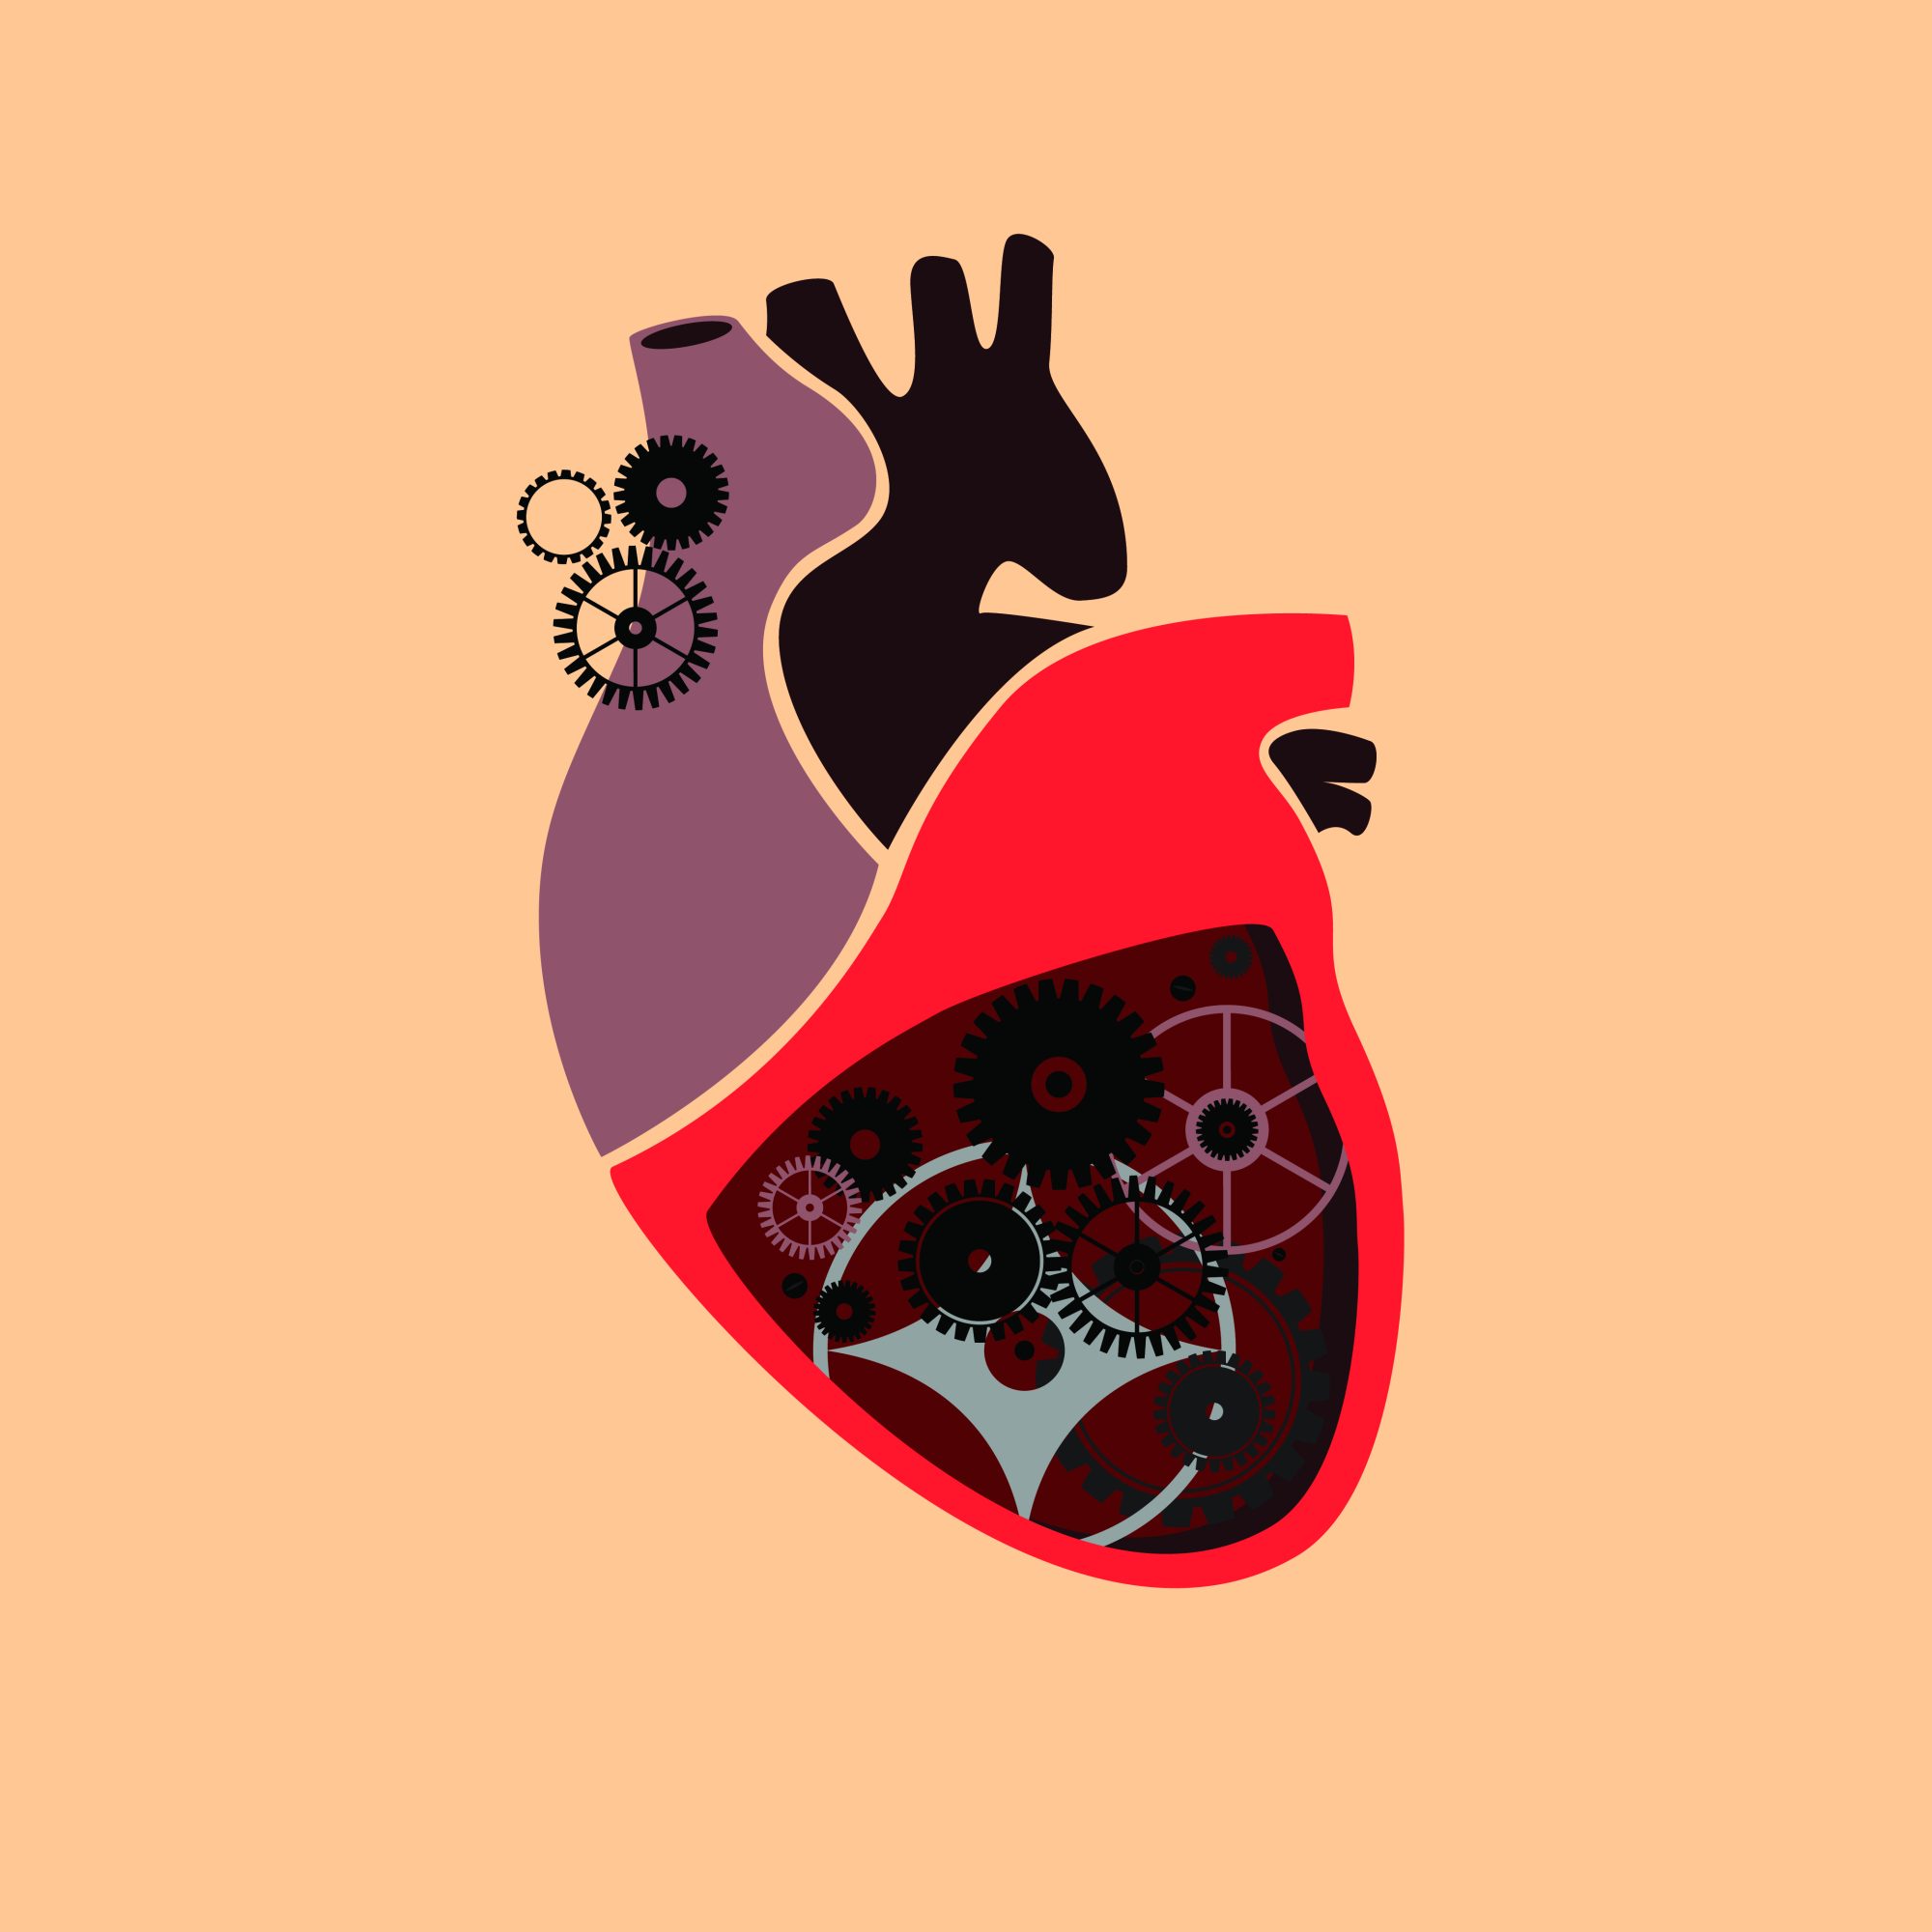 Featured image for “FEVS, fractia de ejectie a ventriculului stang”